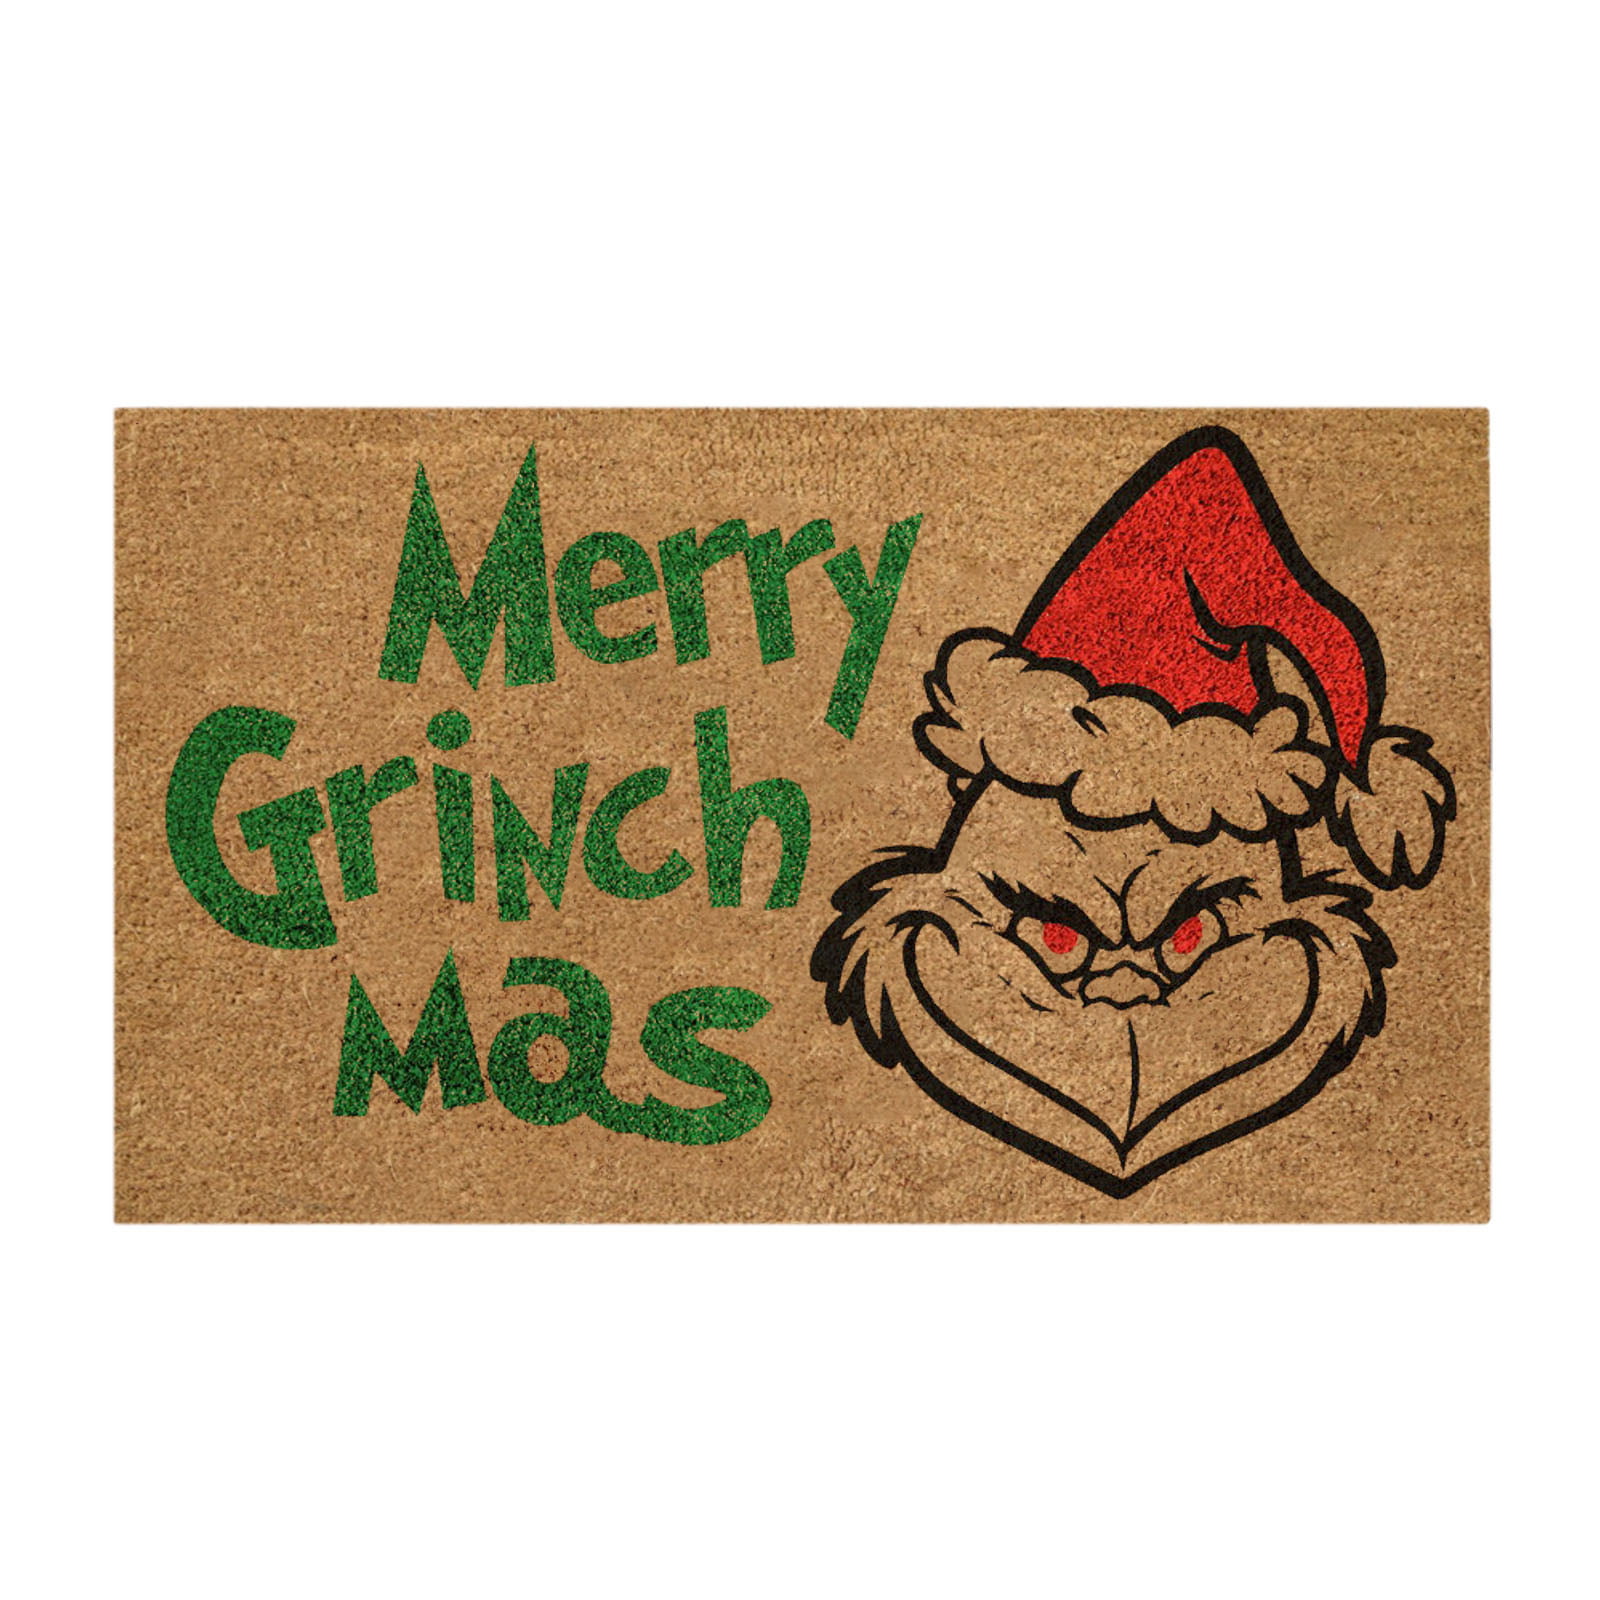 Grinch Doormat Funny Holiday Doormat Christmas Holiday Porch Decor Gift Ideas 